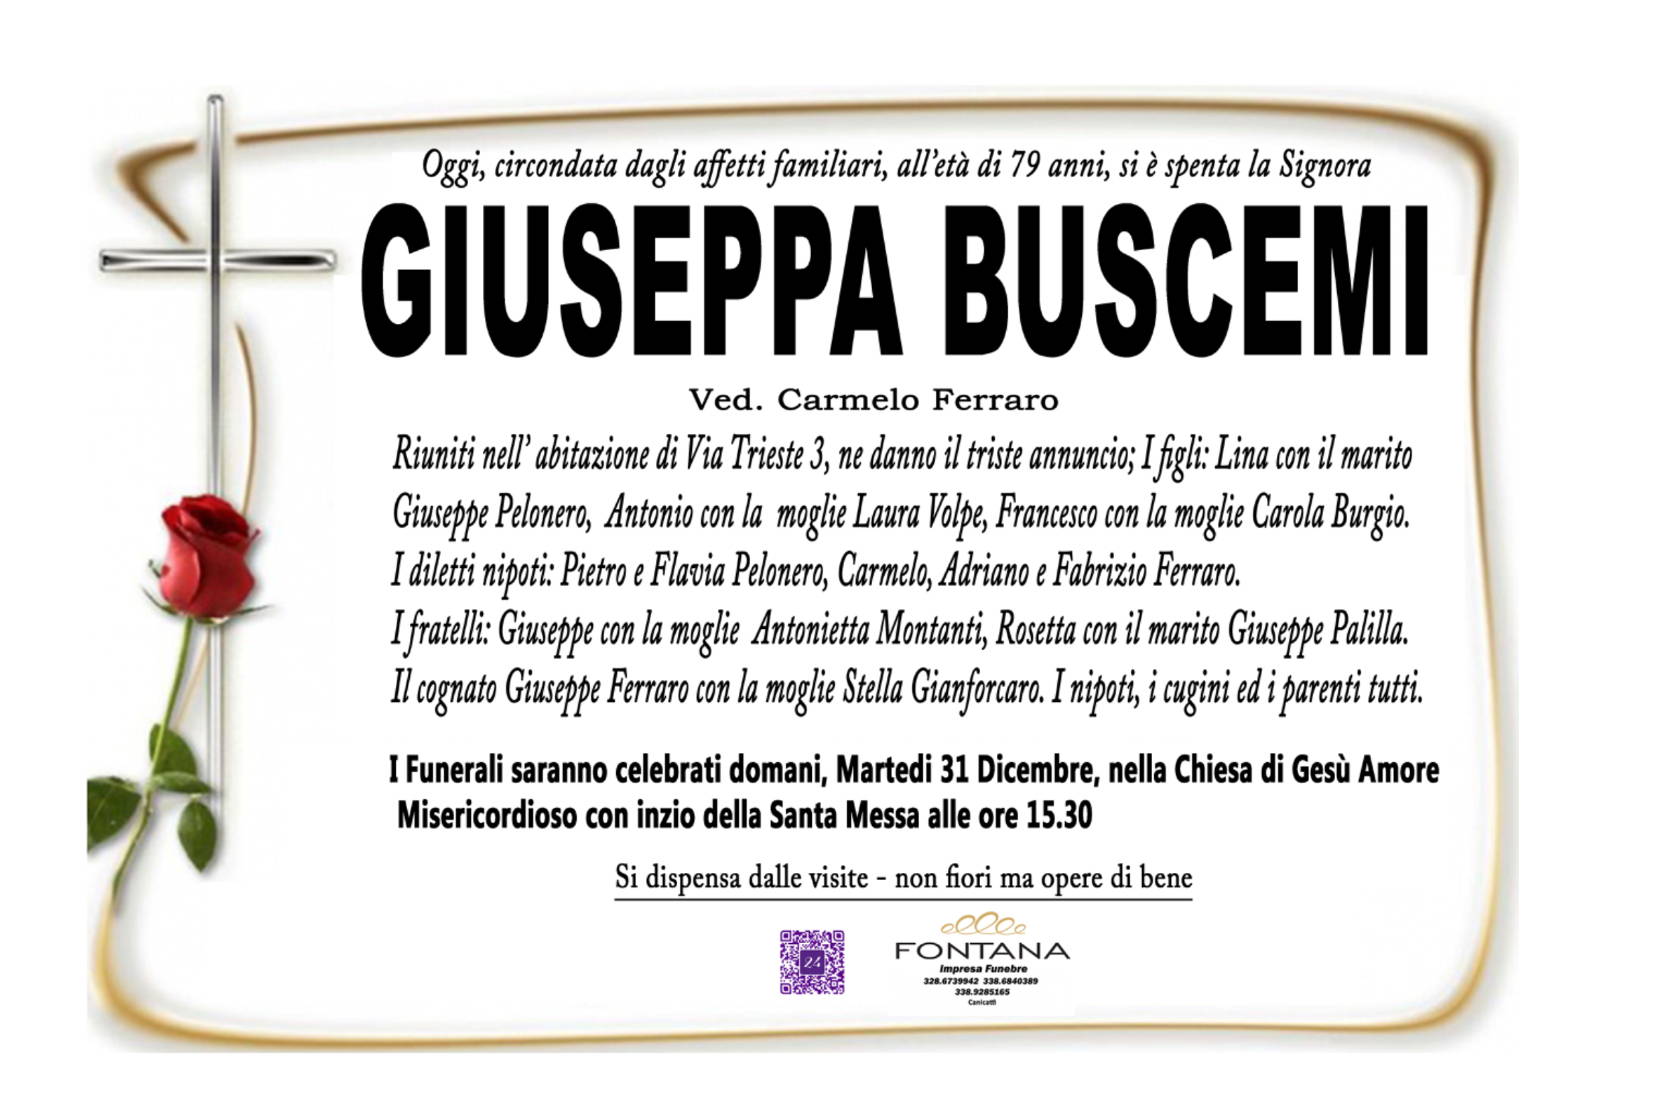 Giuseppa Buscemi